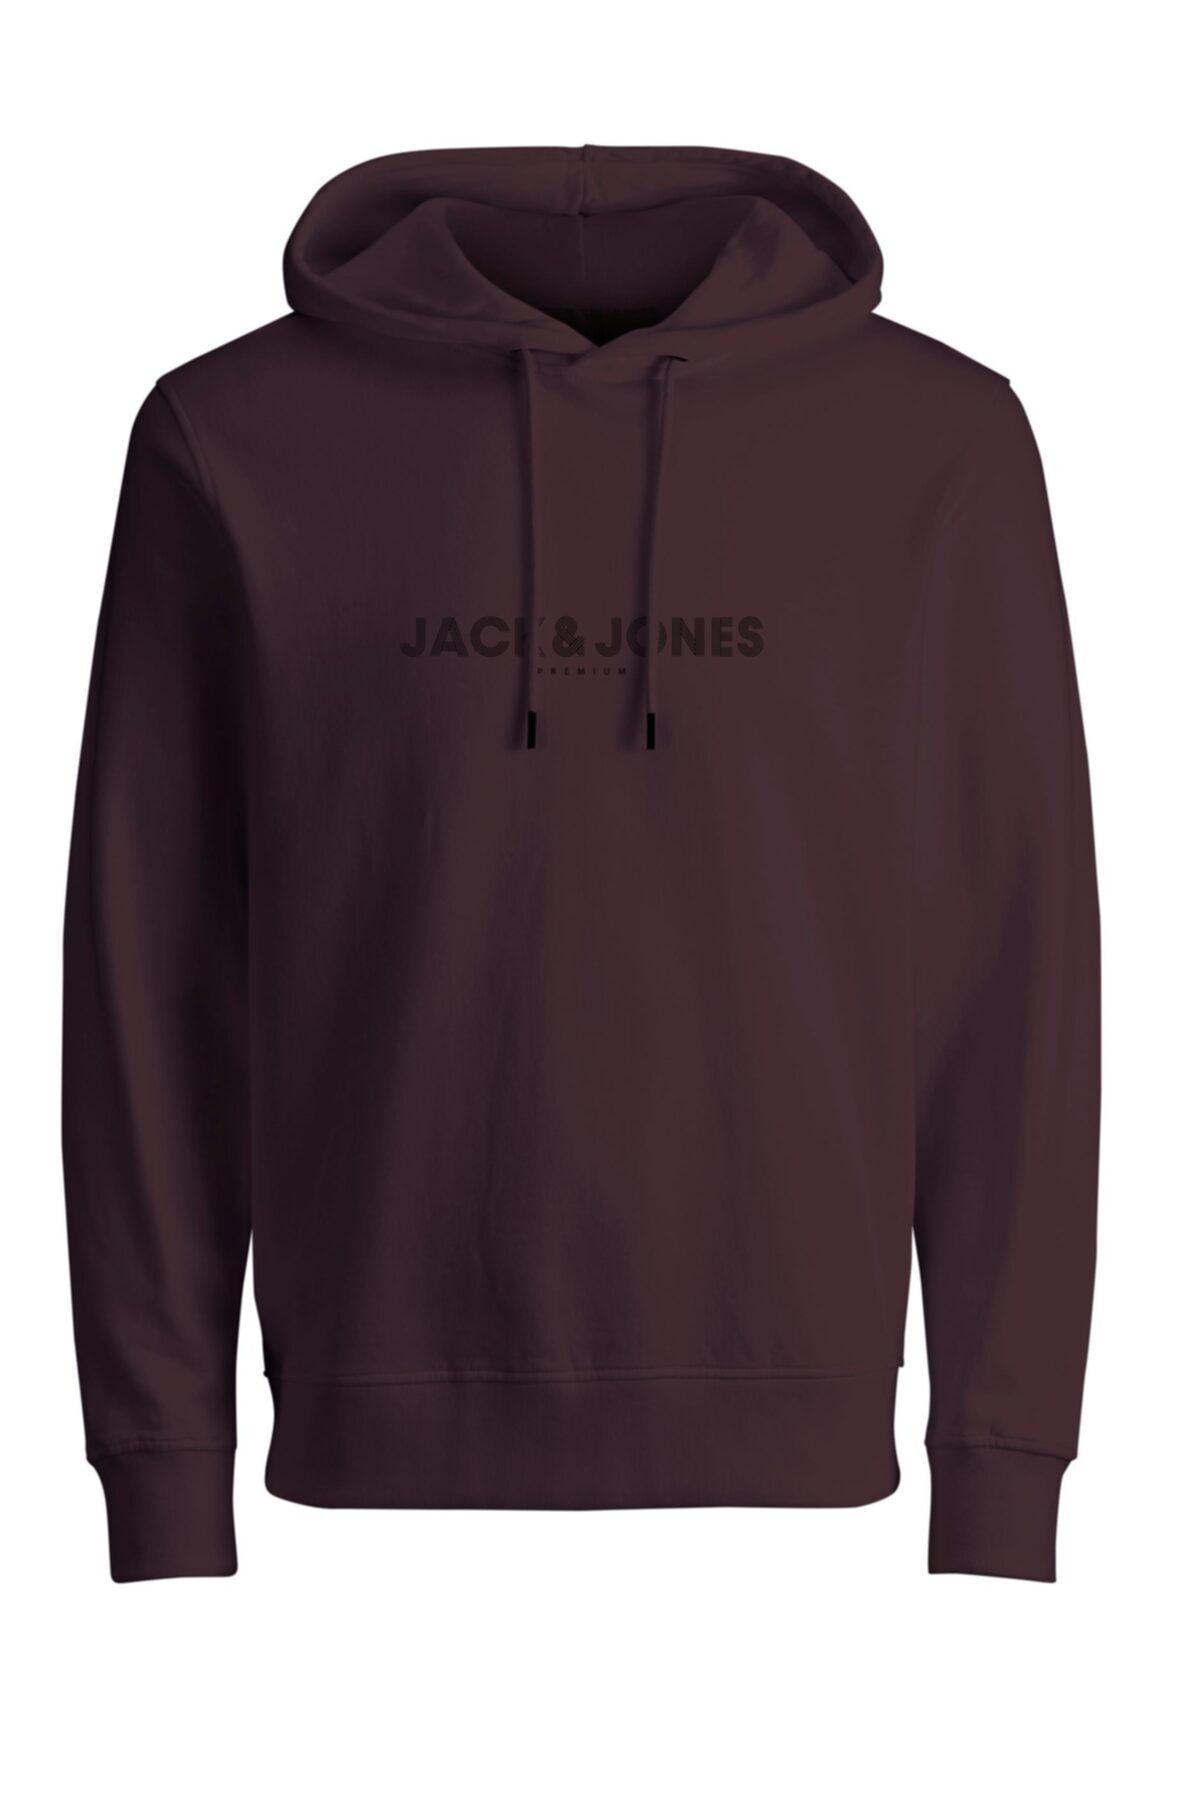 Jack & Jones Erkek Blabooster Bordo Sweatshirt 12201561-18